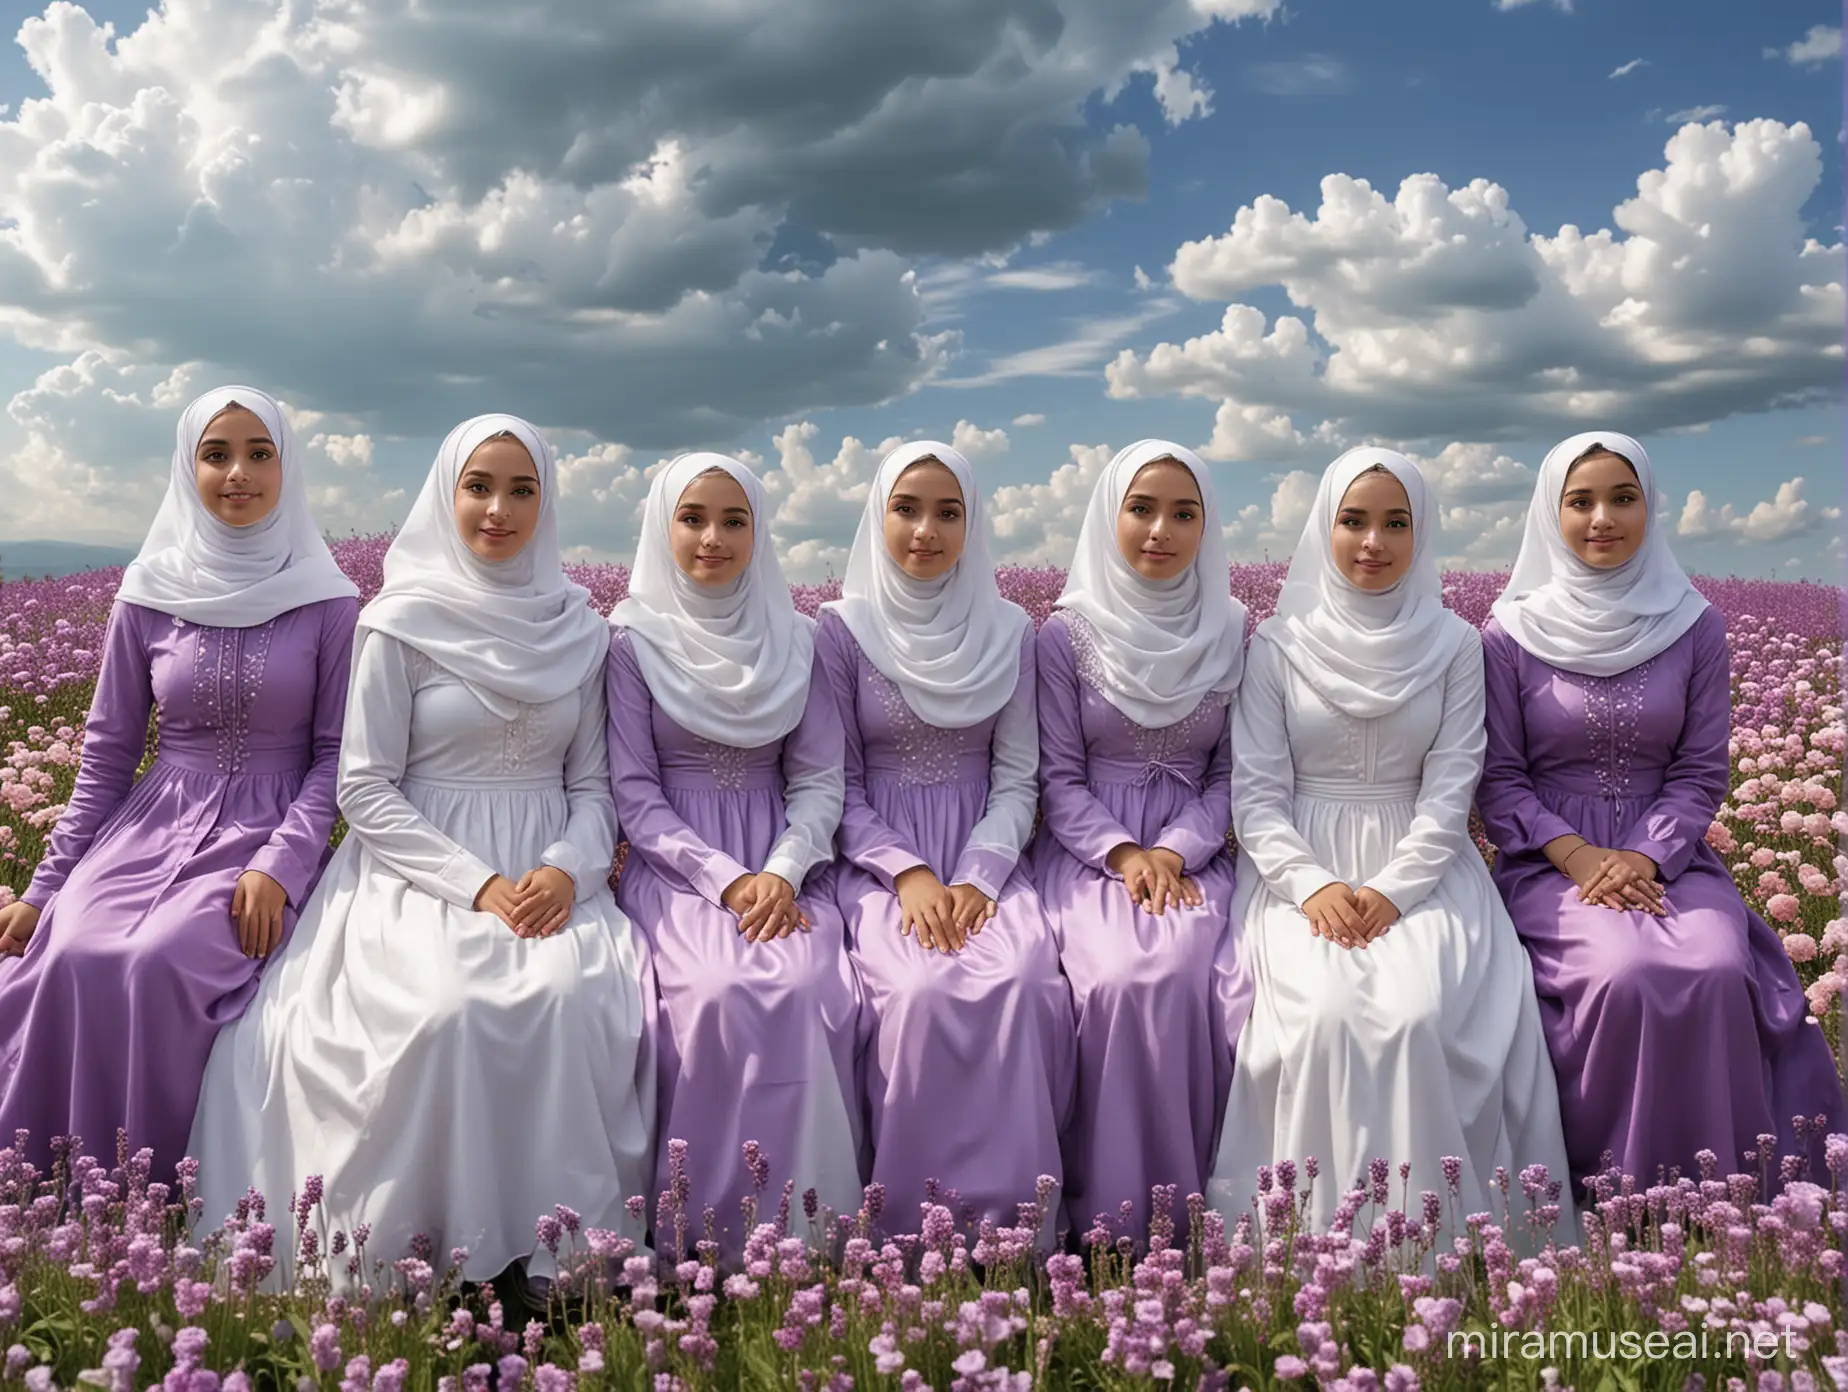 lima belas gadis ber jilbab, cantik cantik, memakai gaun warna ungu putih, ada yang berdiri ada yang duduk, baiground hamparan bunga ,langit mendung awan cerah, super realistis, wajah asli manusia
hiper realistik, photography, cinematic, ultra hd 8k, full body.wajah terlihat jelas.